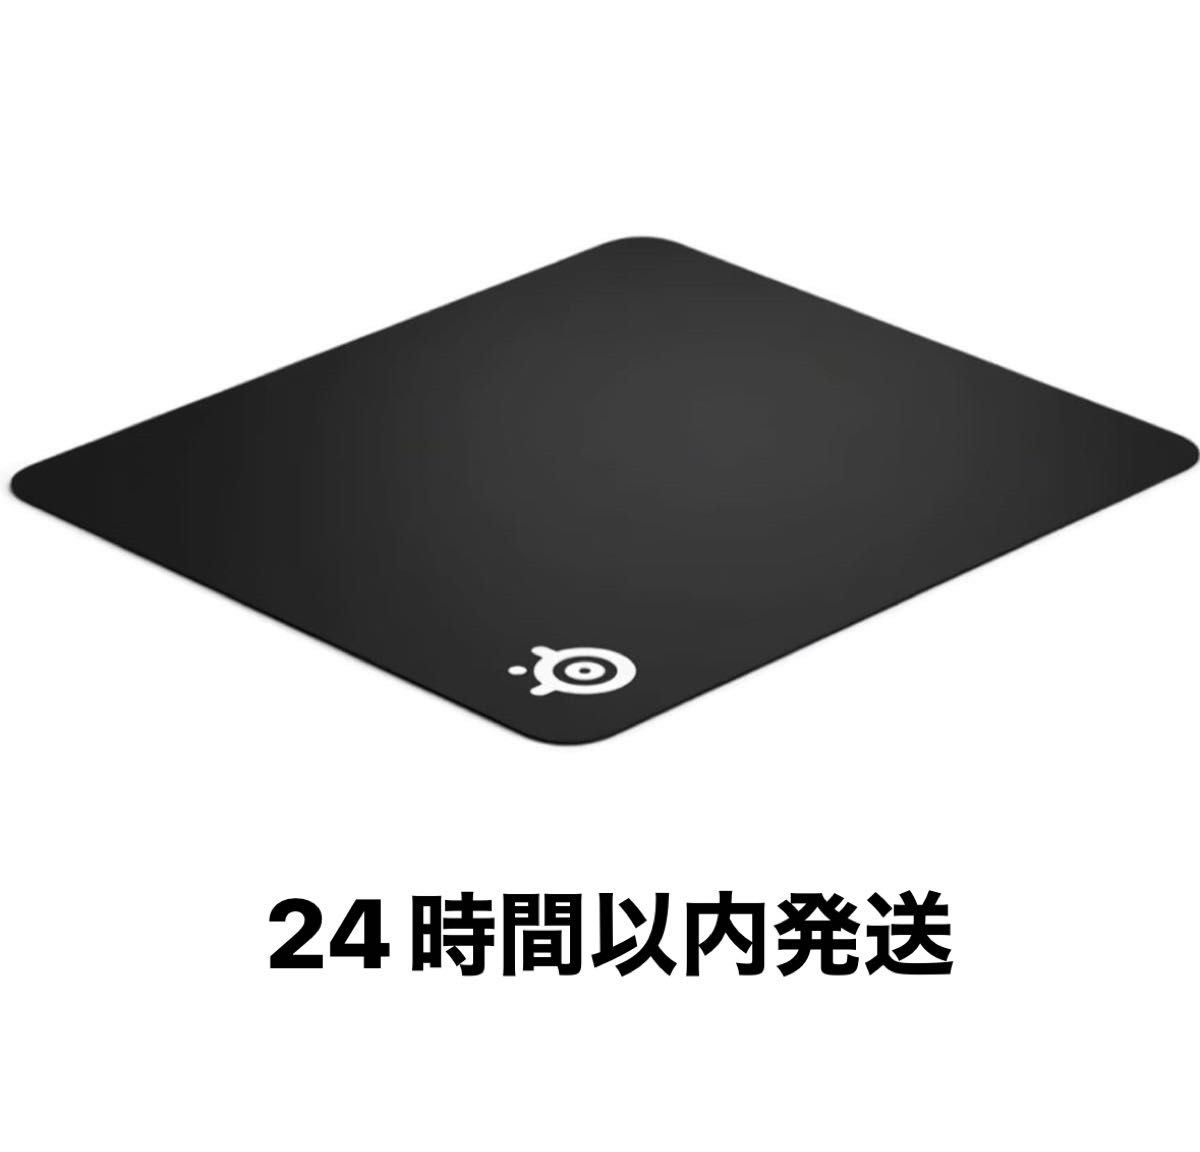 SteelSeries ゲーミングマウスパッド 大型 ノンスリップラバーベース ブラック 45cm×40cm×0.2cm QcK 